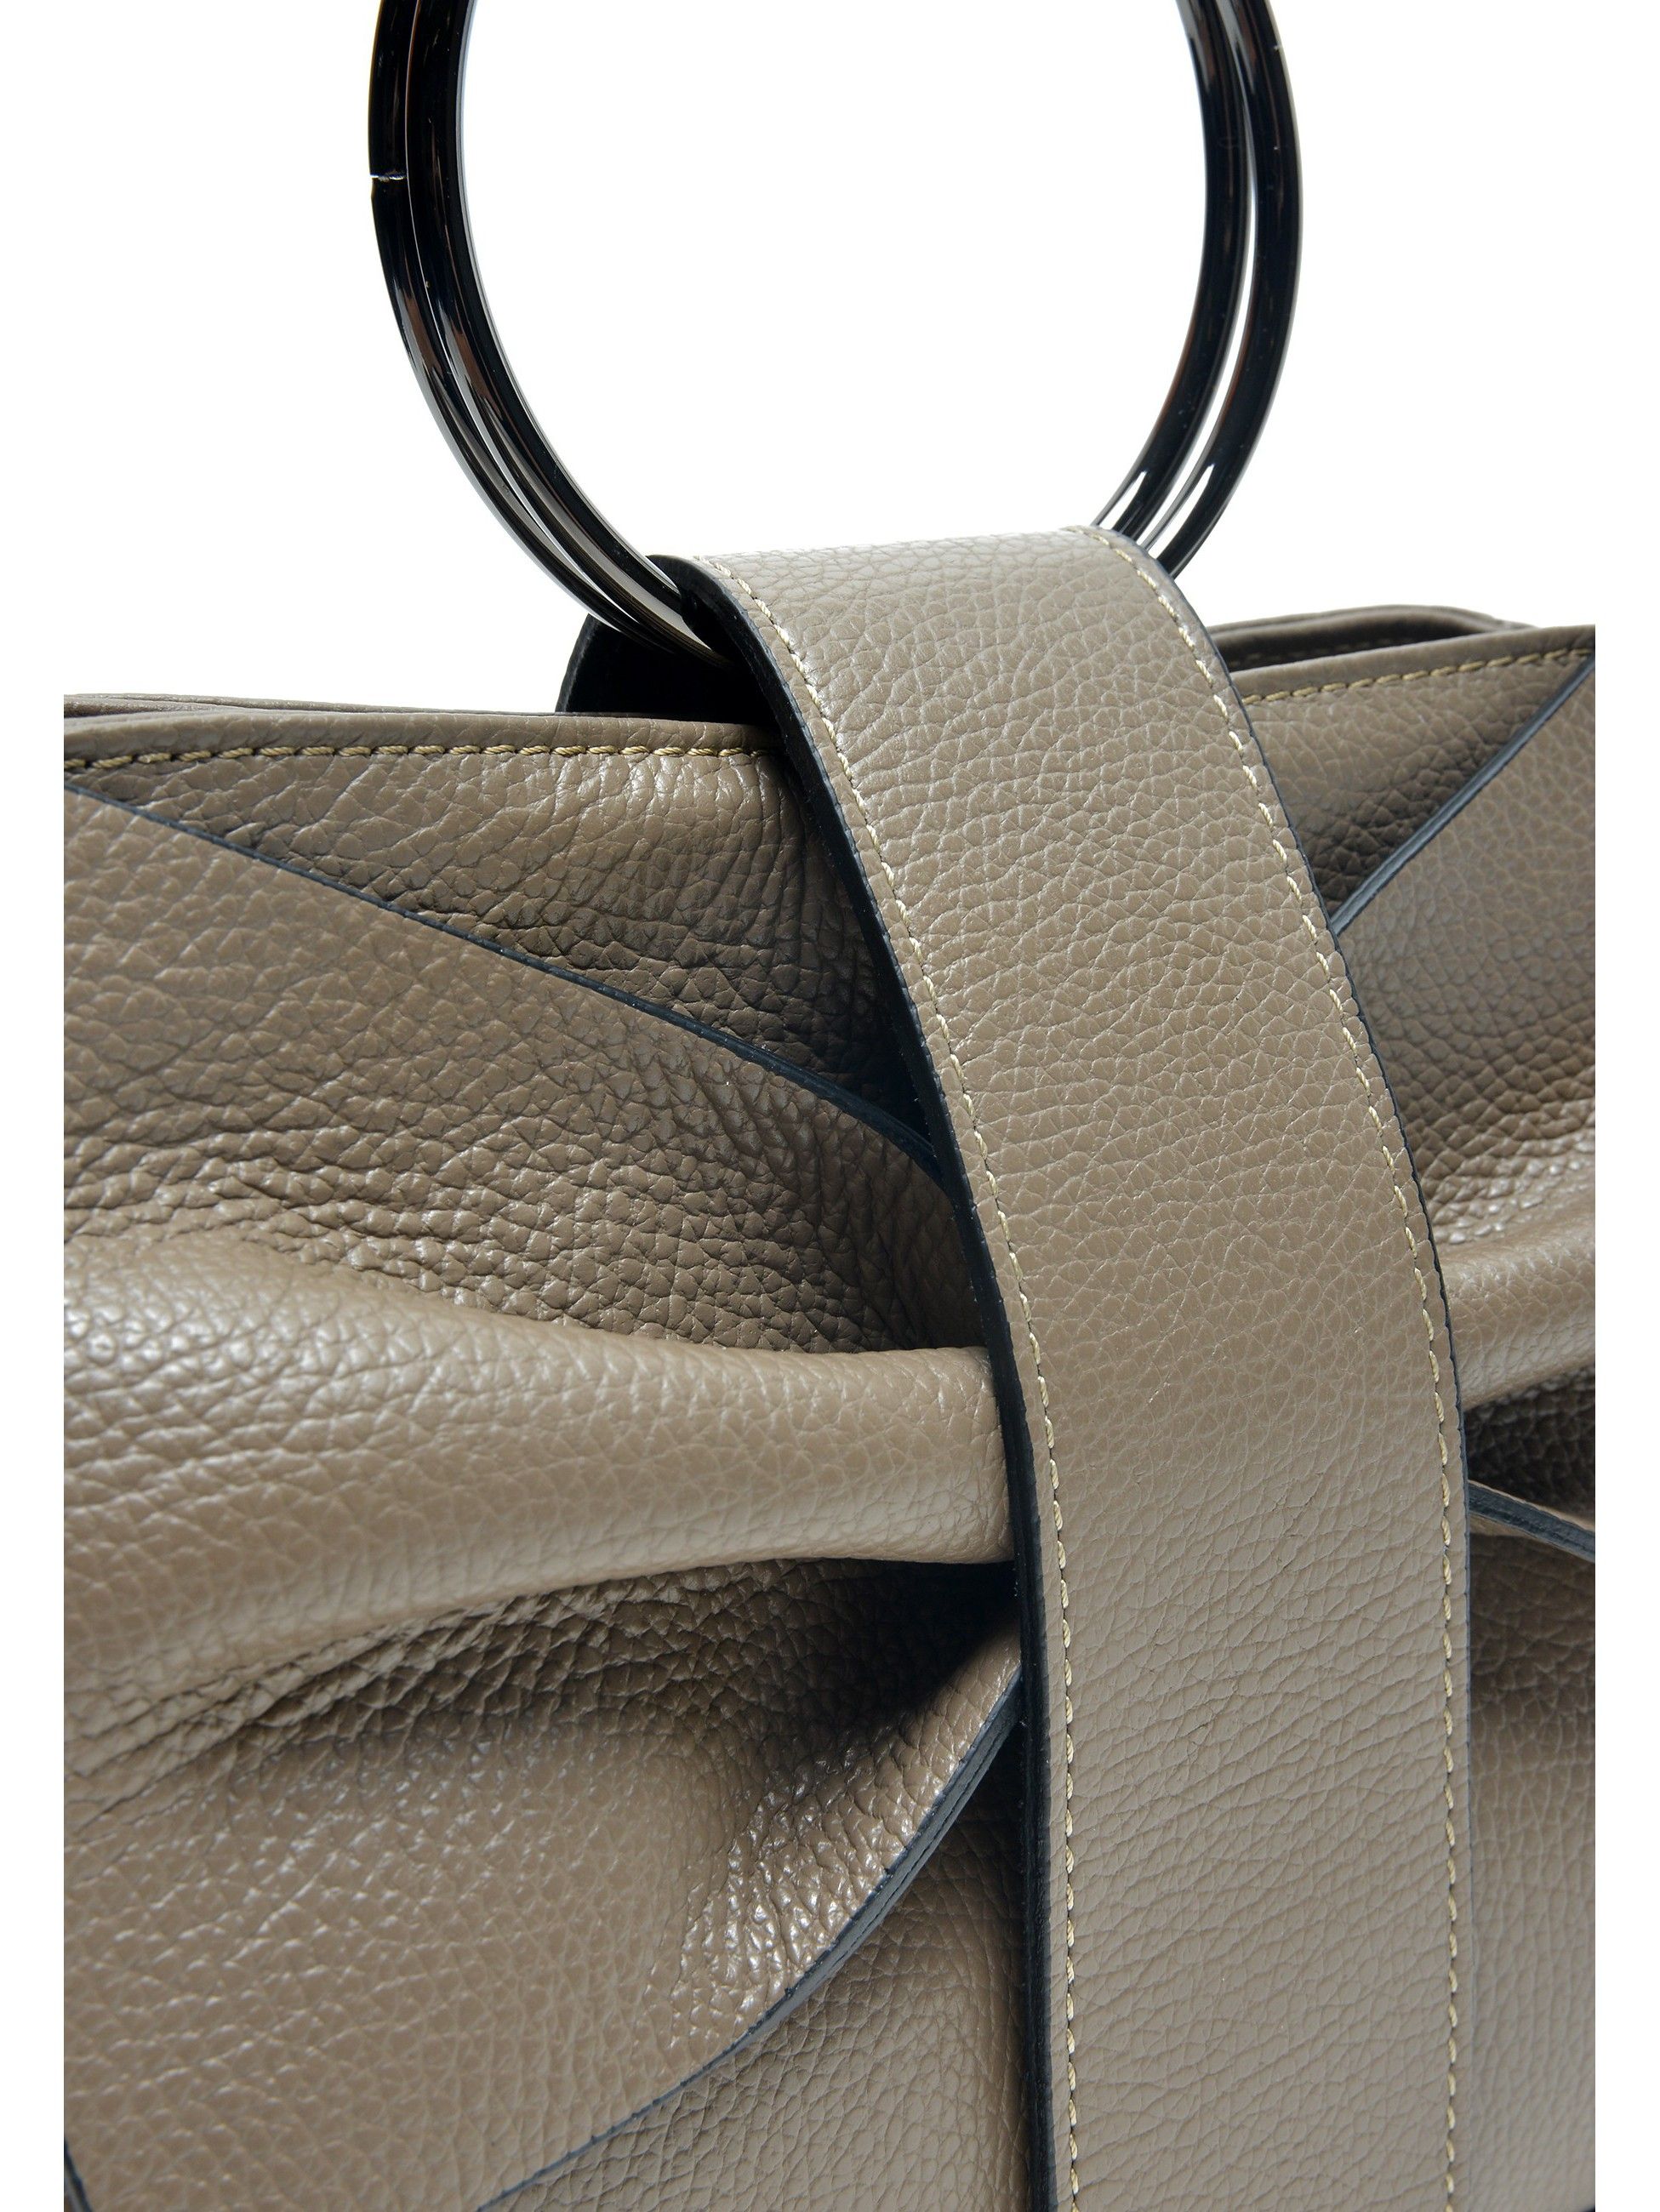 Handbag
100% cow leather
Top zip closure
Inner zip pocket
Back zip pocket
Metal hoop handle
Bow decoration
Dimensions (L): 22x28x12 cm
Handle: 30 cm non adjustable
Shoulder strap: 1x120 cm adjustable